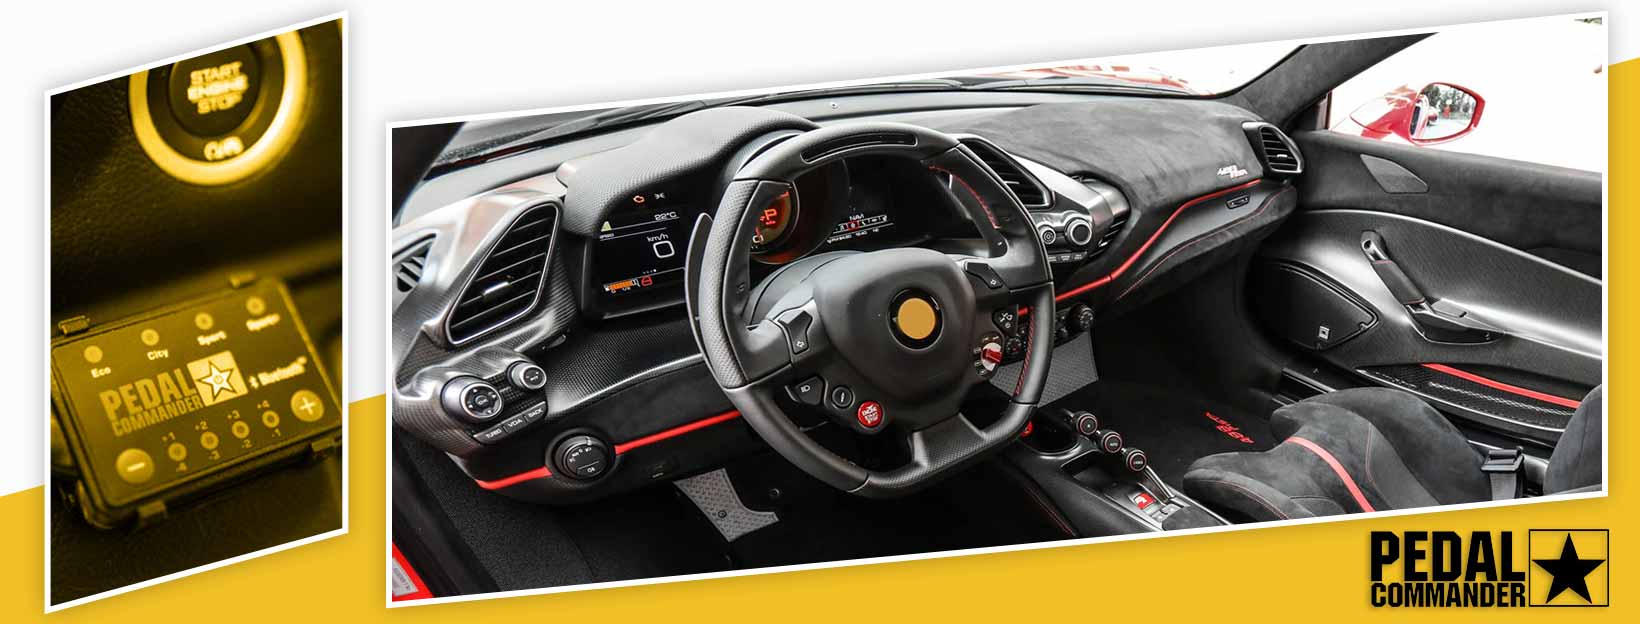 Pedal Commander for Ferrari 488 - interior